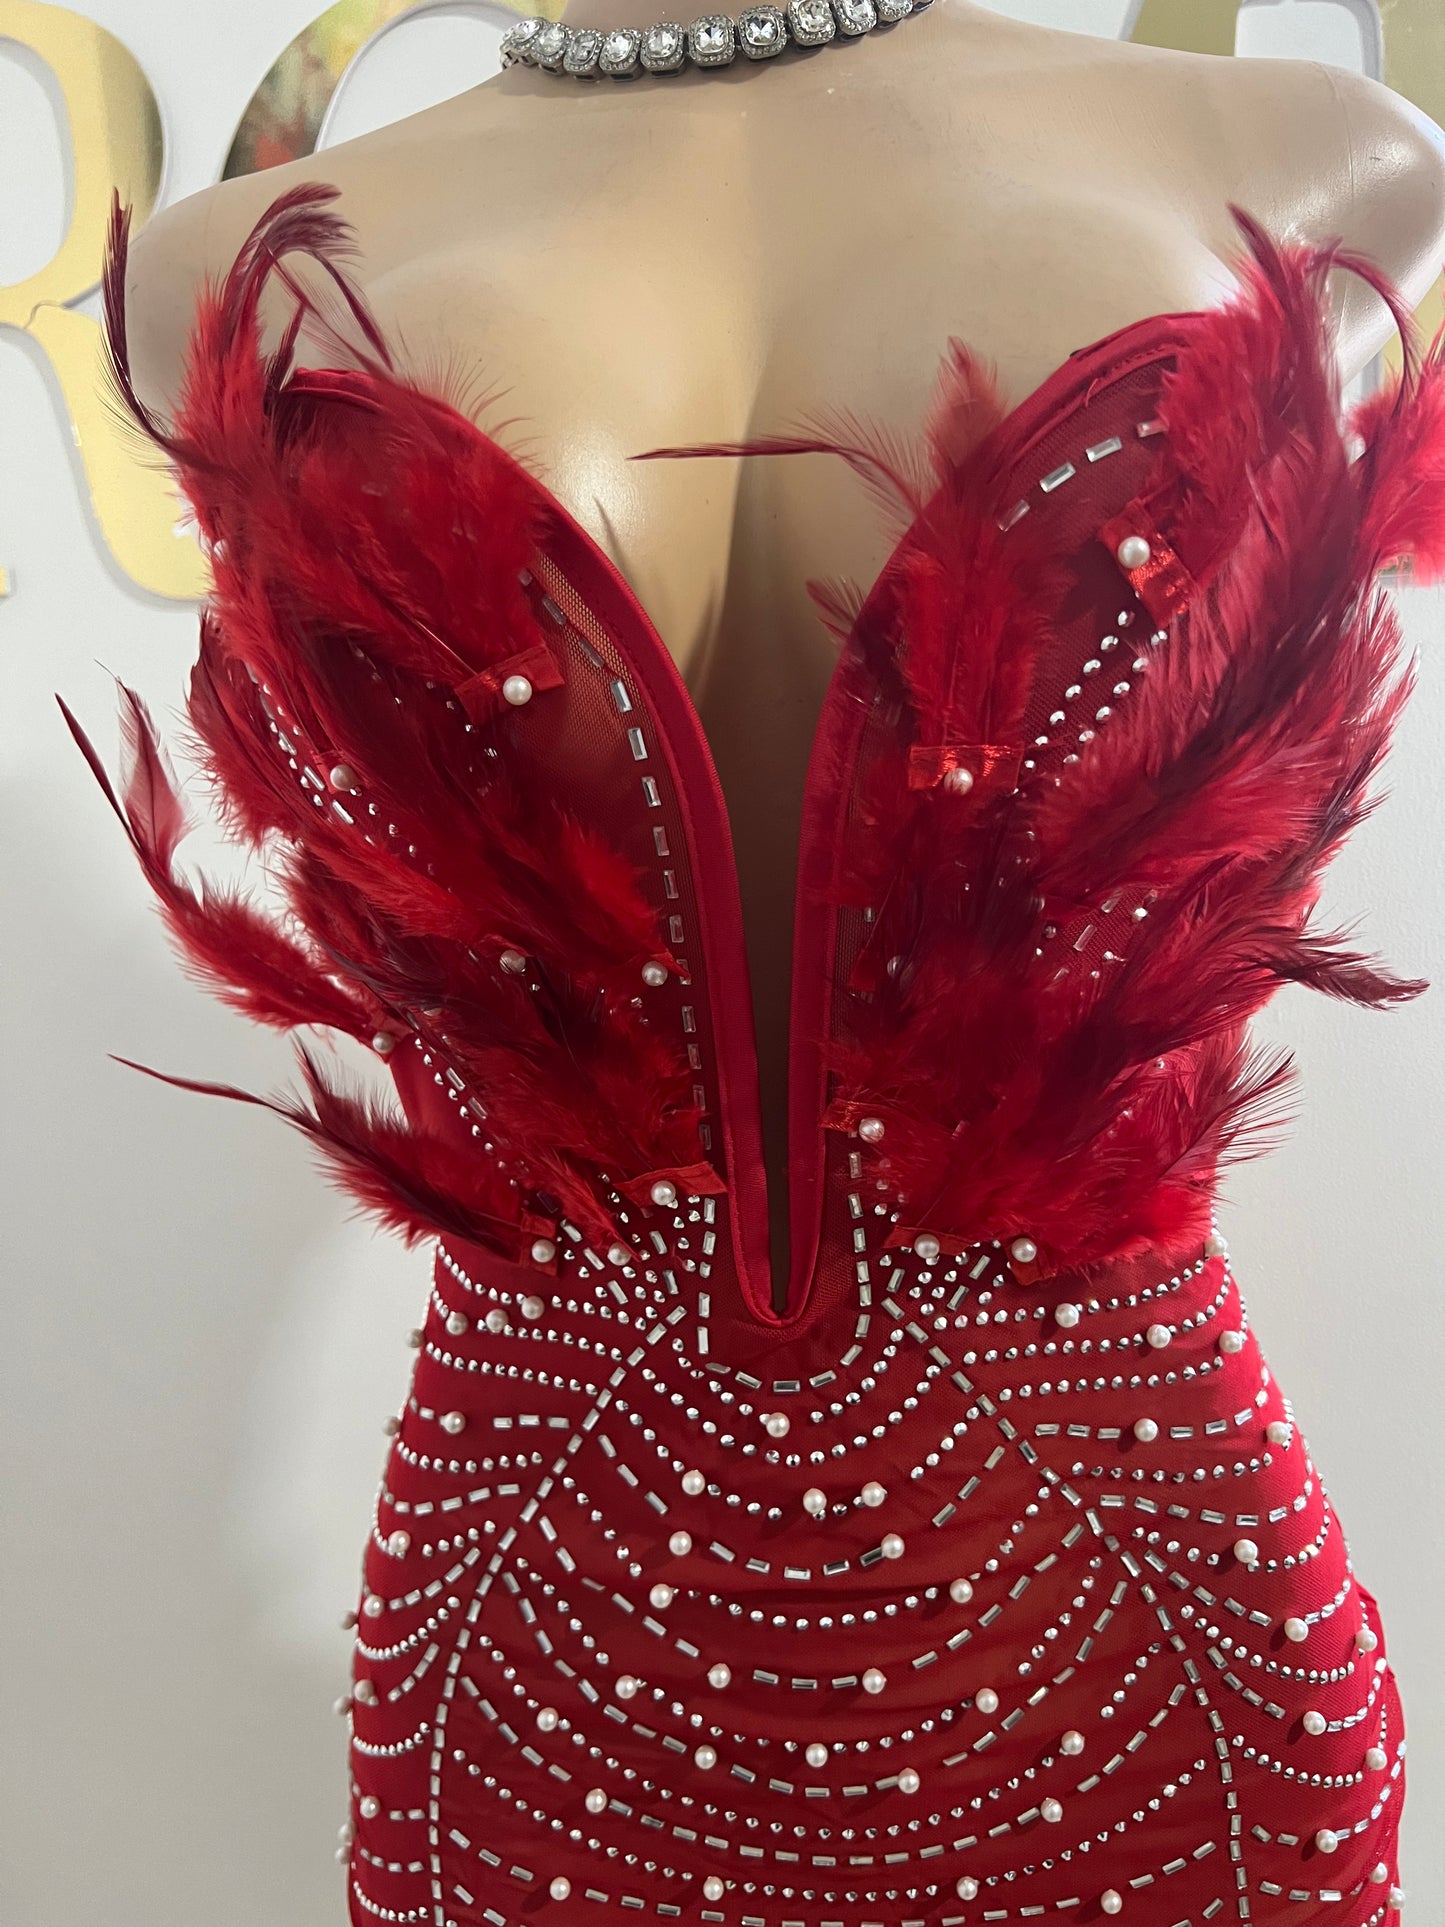 Elle Feather Crystal Dress (Darker Red)